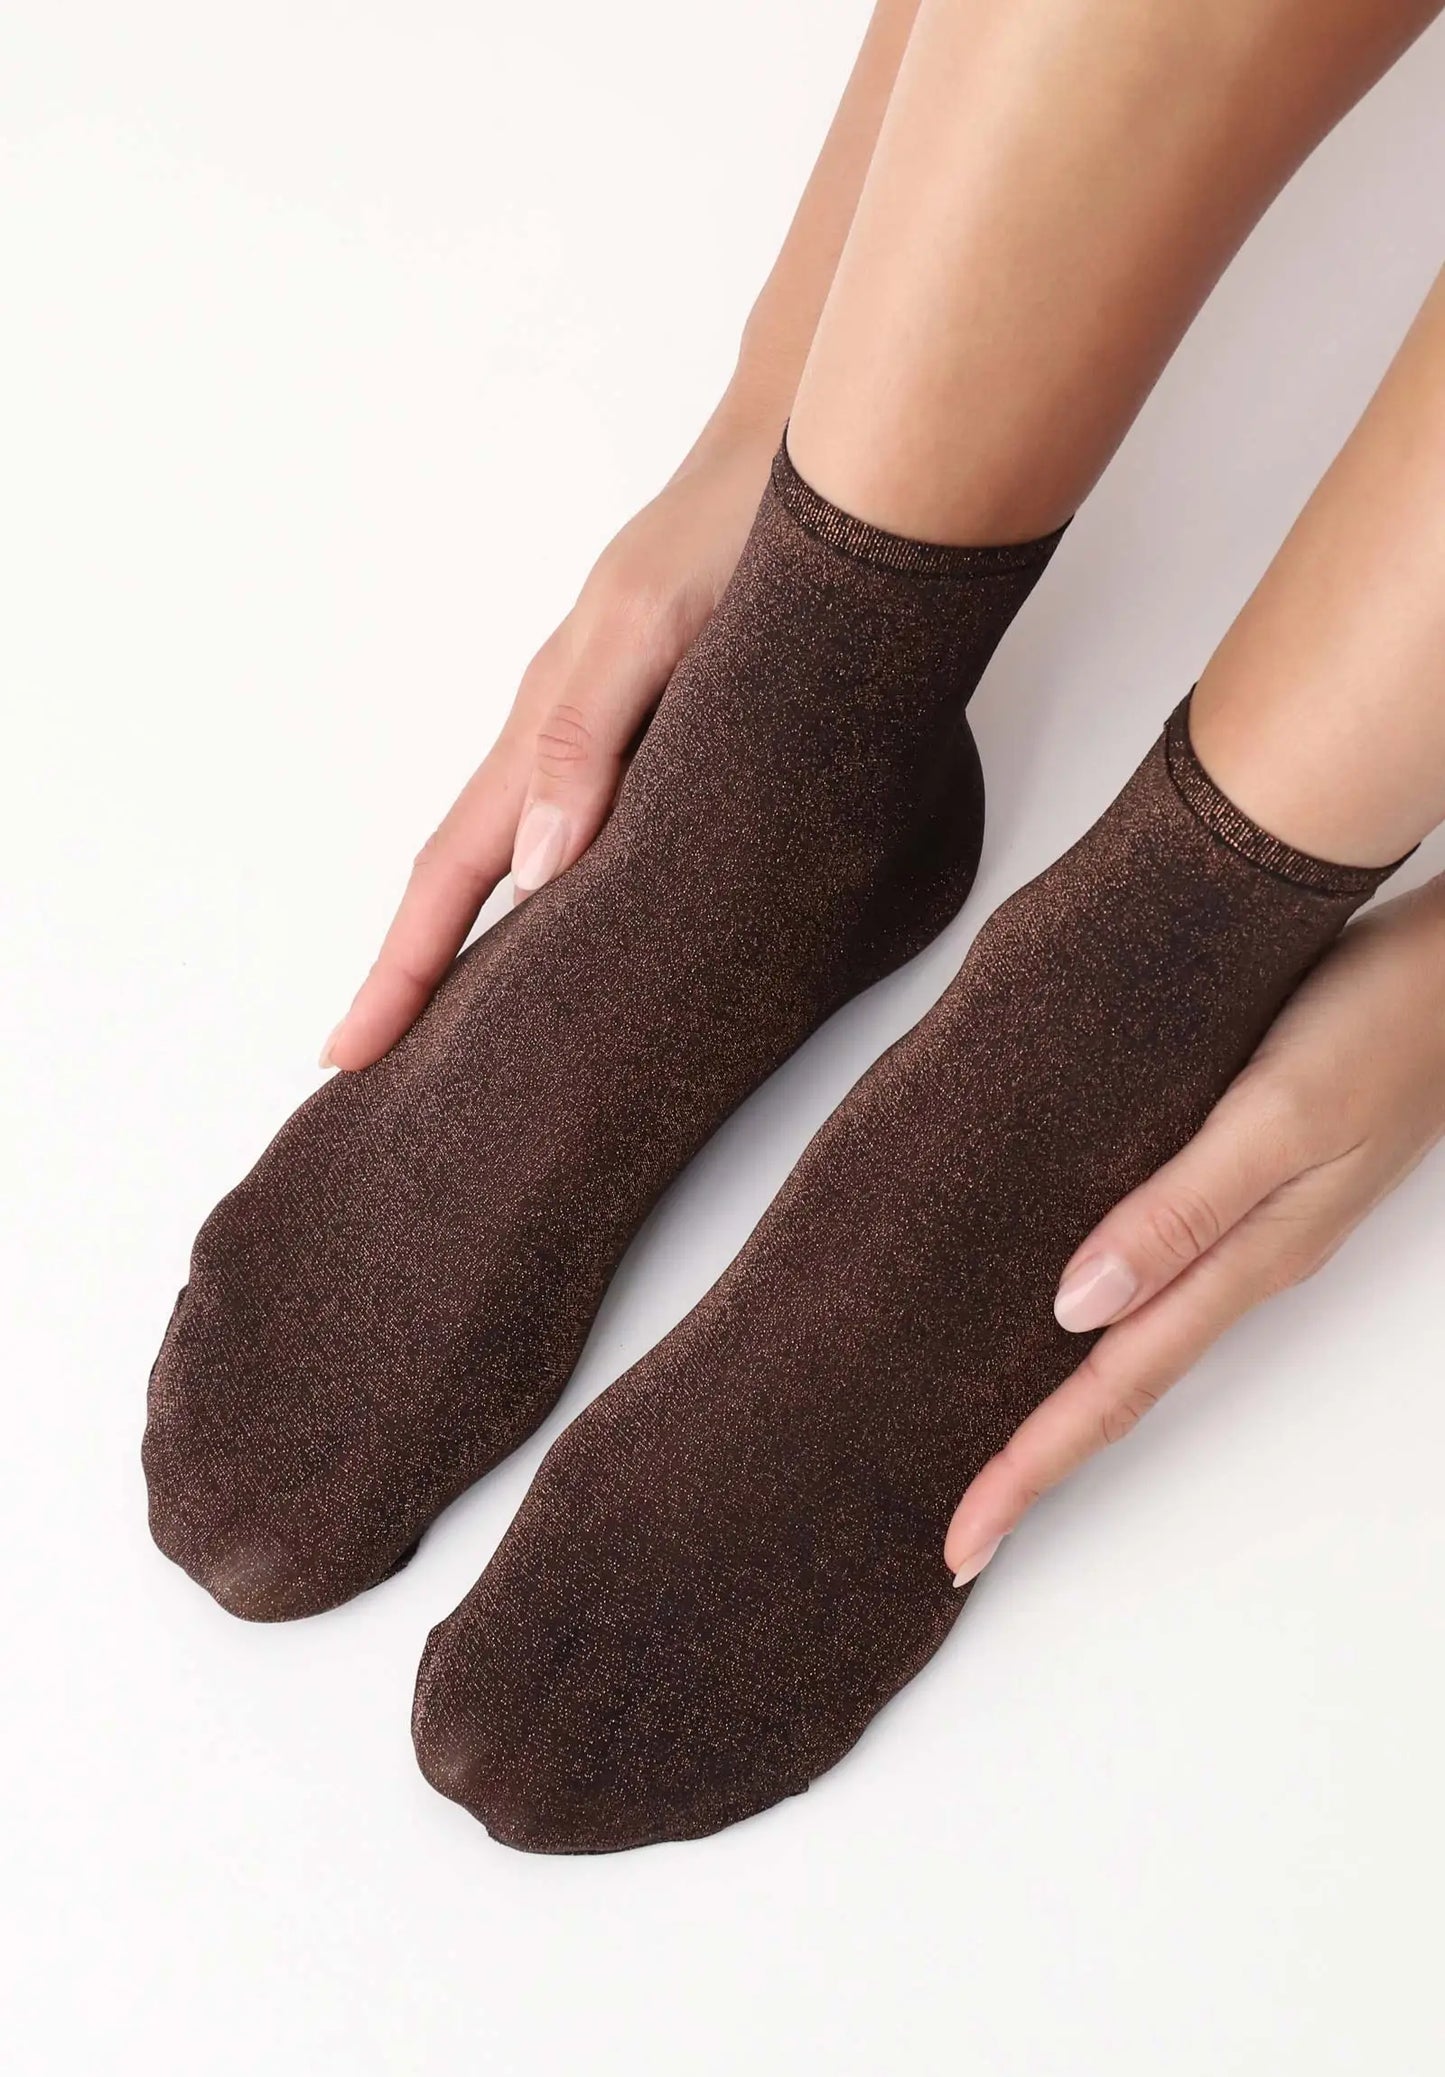 Oroblu Diamonds Sock - Black opaque sparkly lamé ankle socks with bronze metallic yarn